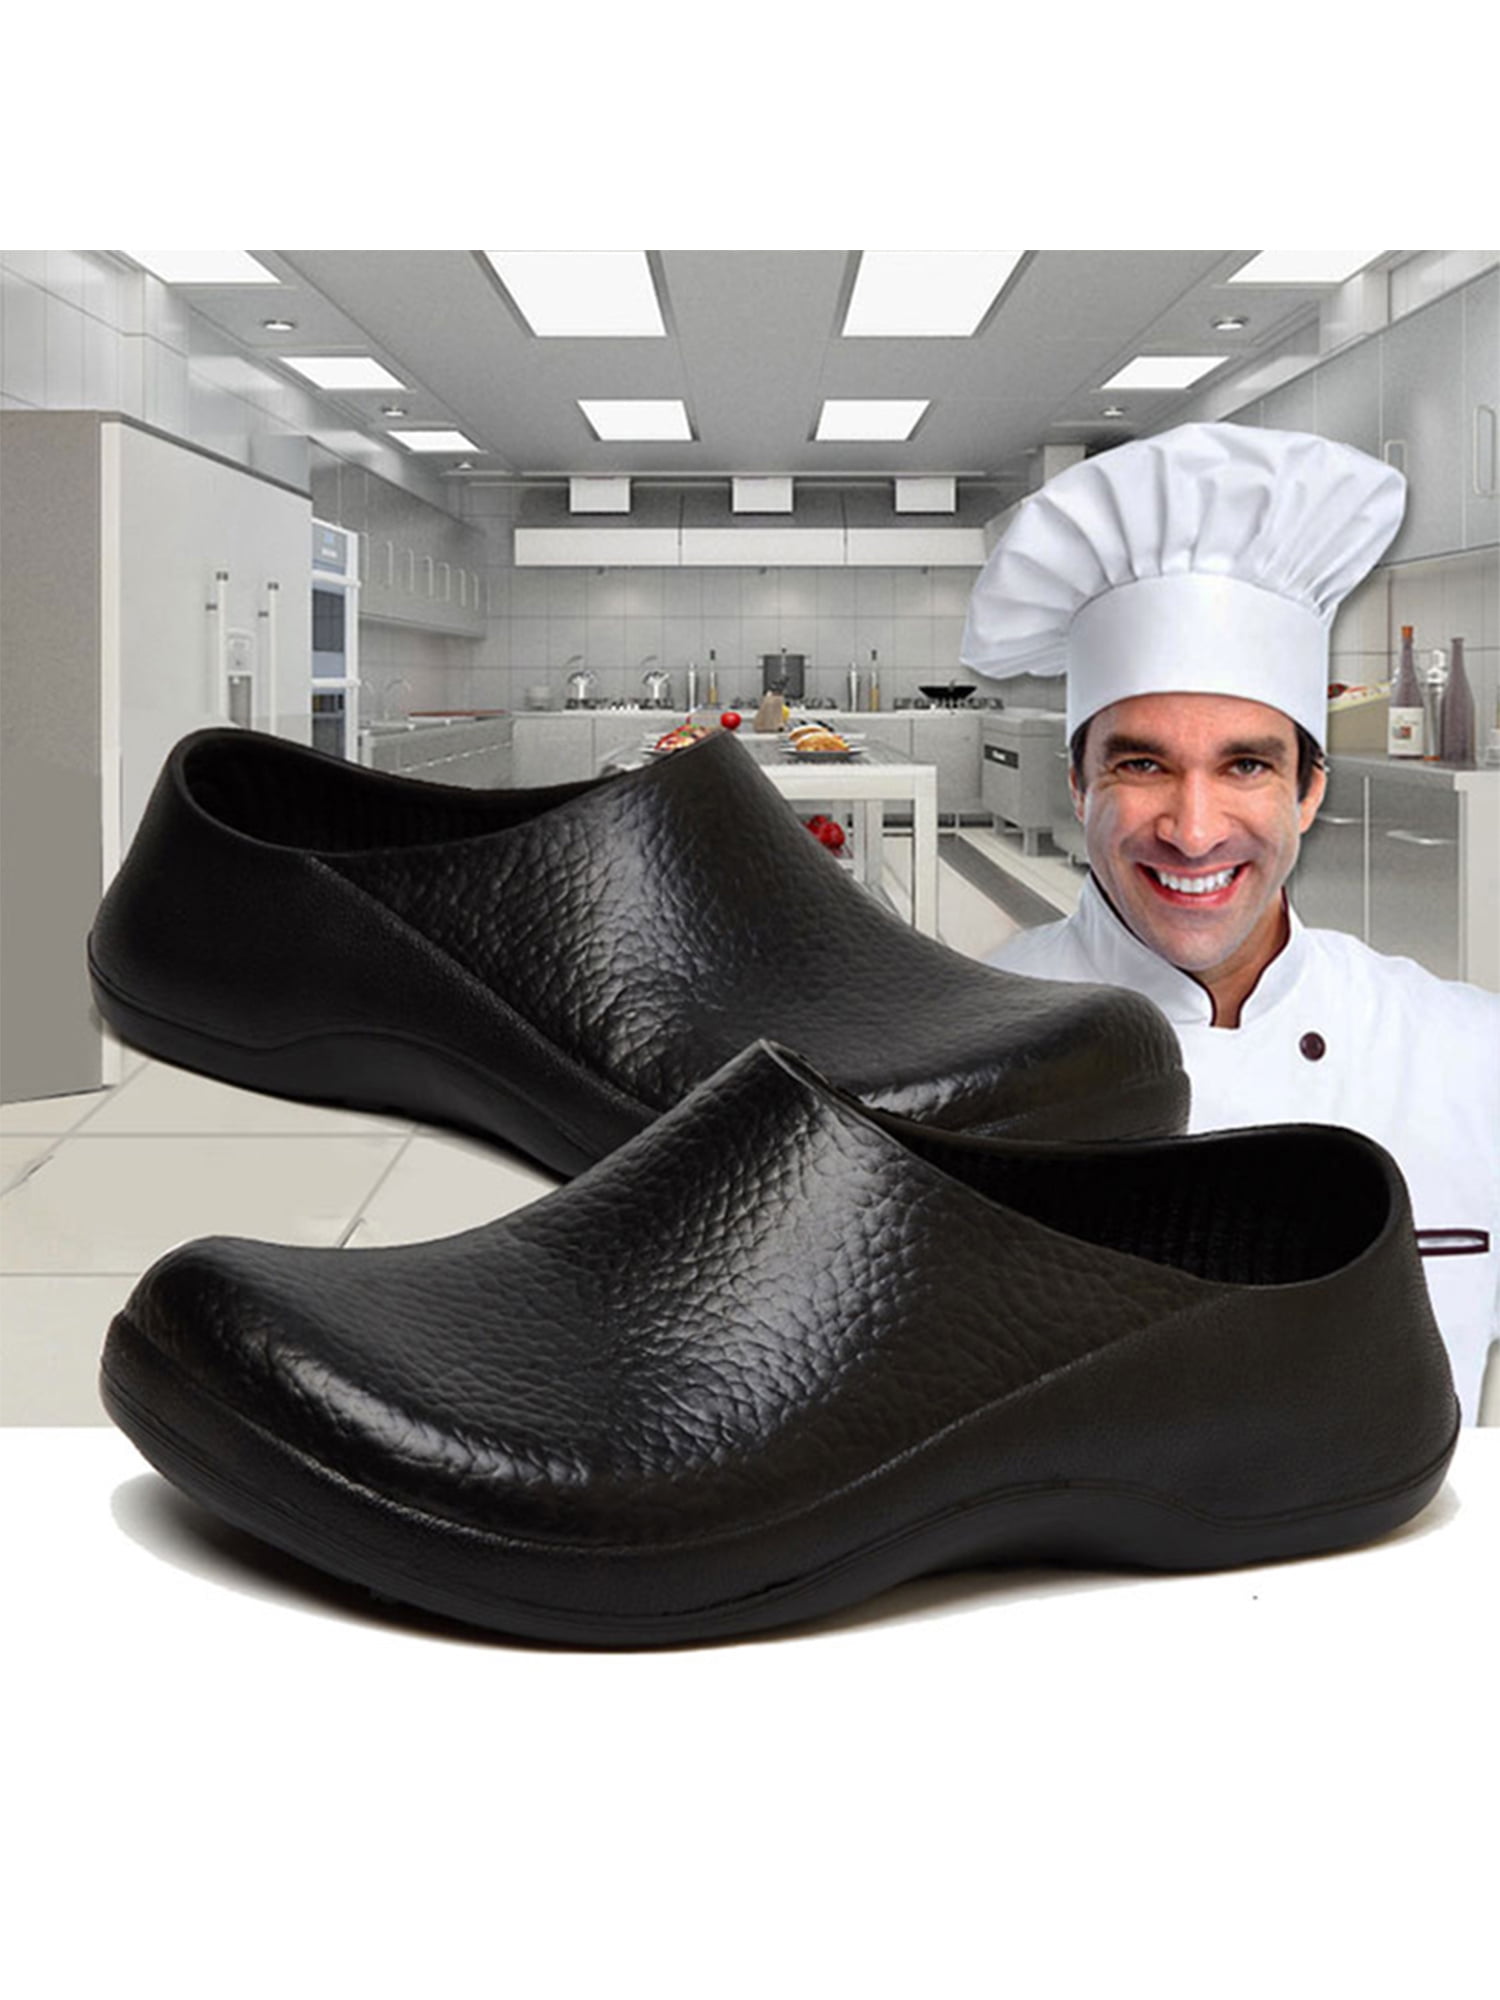 3-Whole Chef Kitchen Non Slip Resistant Anti-sliding Safety Rubber Shoes 